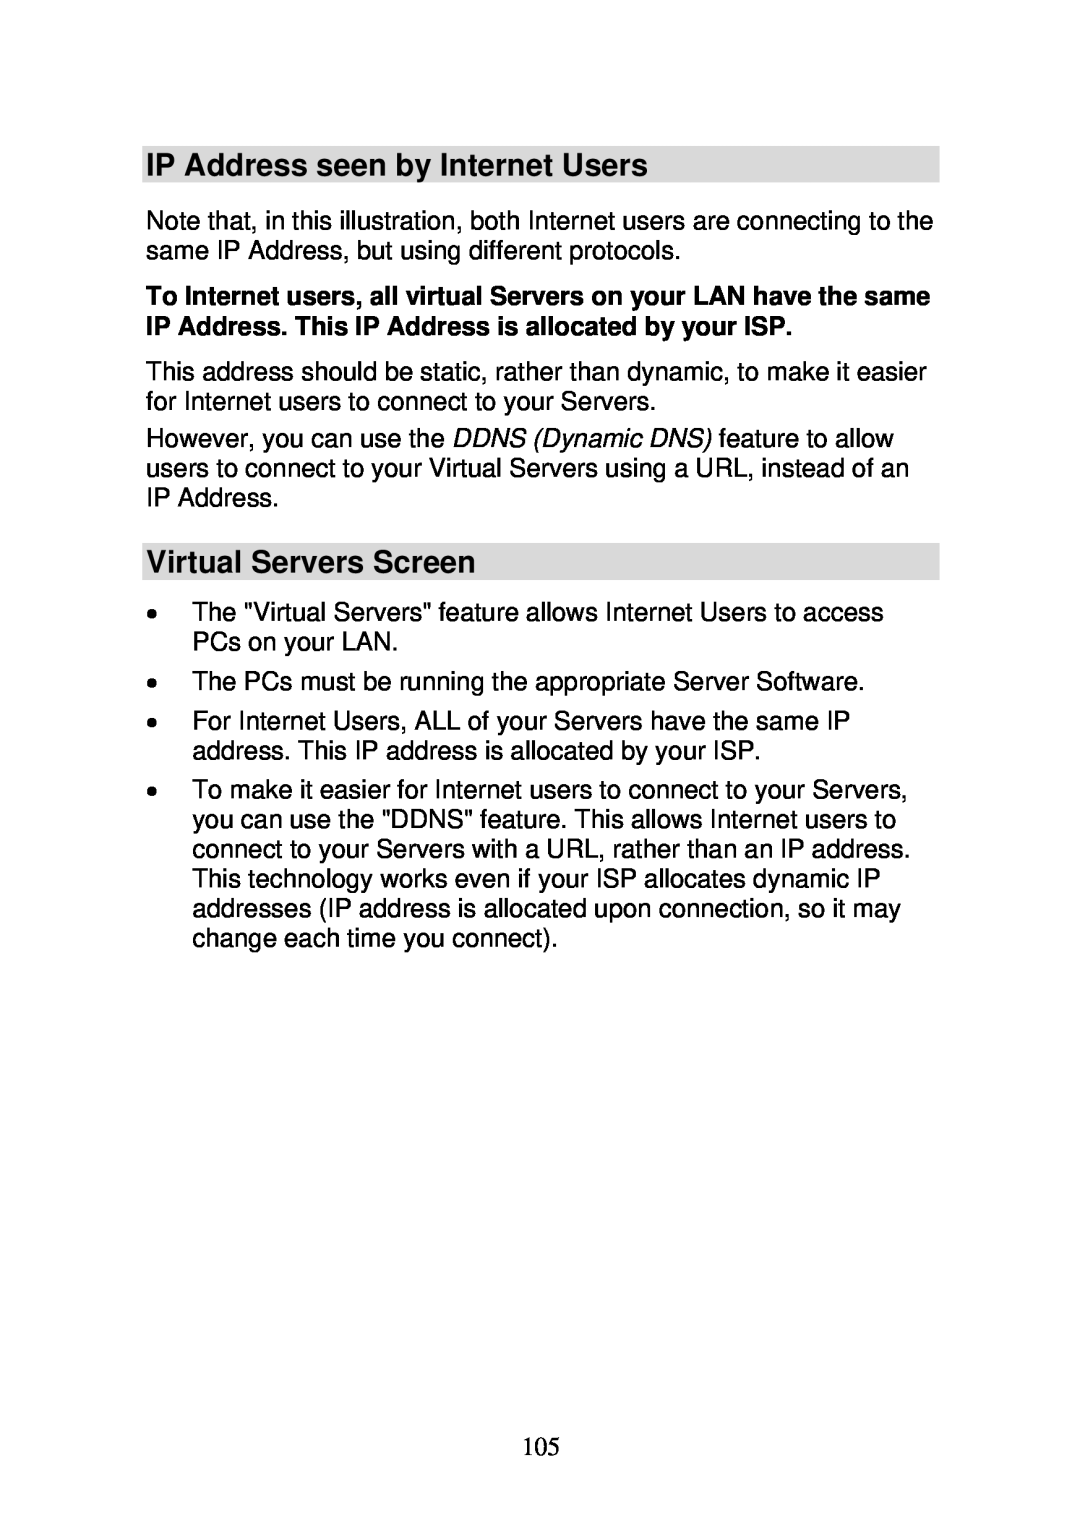 3Com WBR-6000 user manual IP Address seen by Internet Users, Virtual Servers Screen 